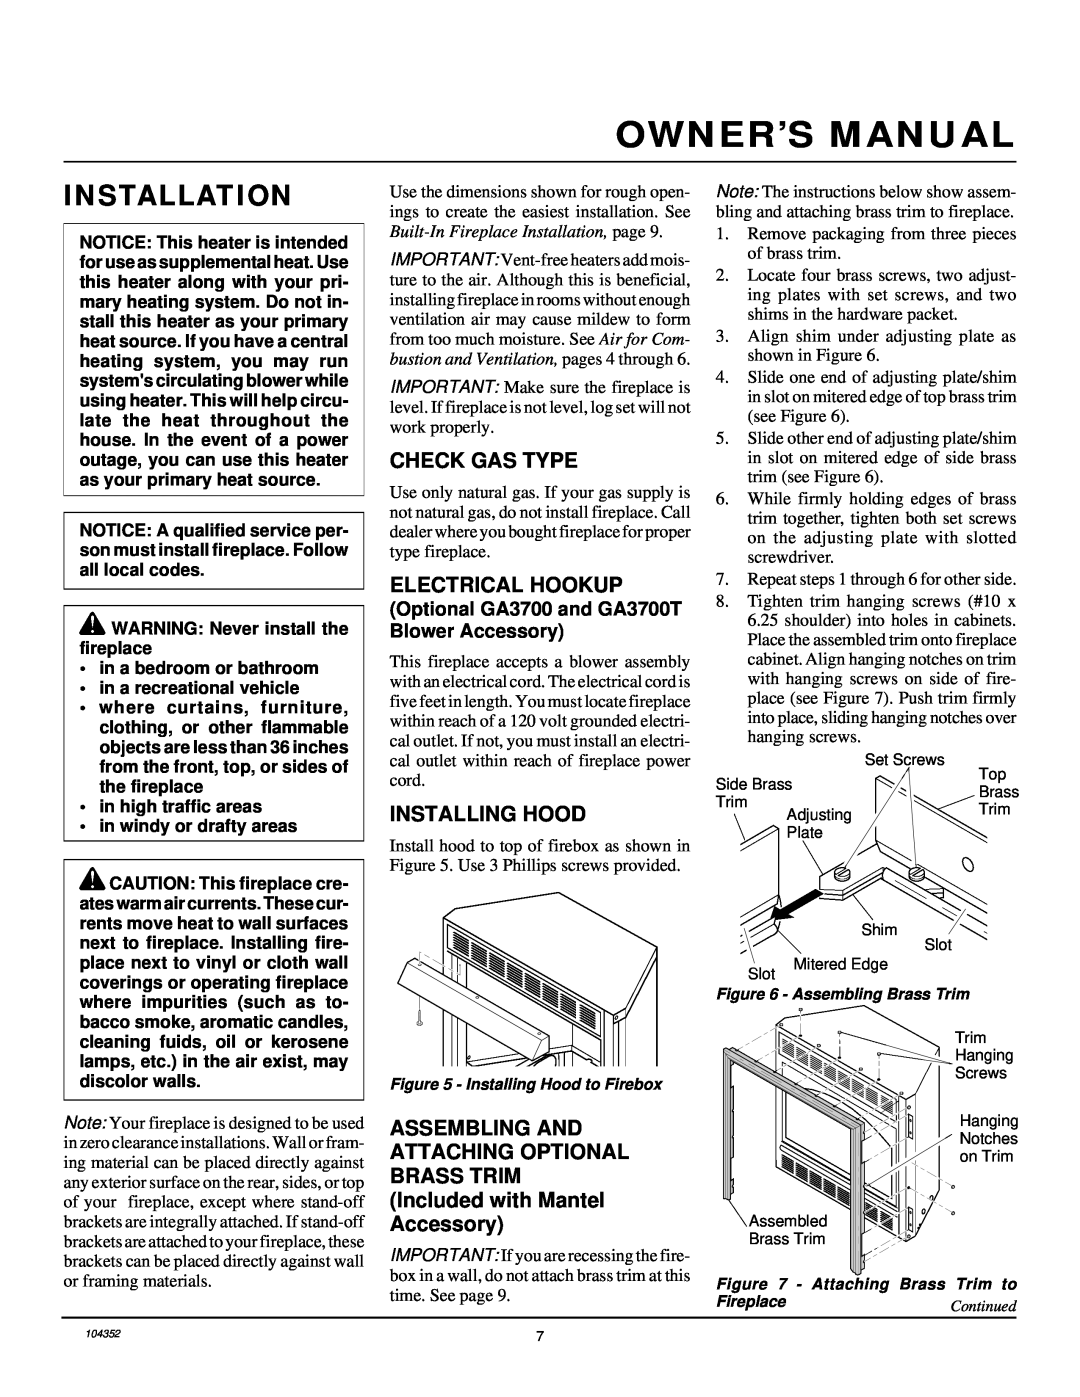 Desa VYGF33NR installation manual Installation, Check Gas Type, Electrical Hookup, Installing Hood 